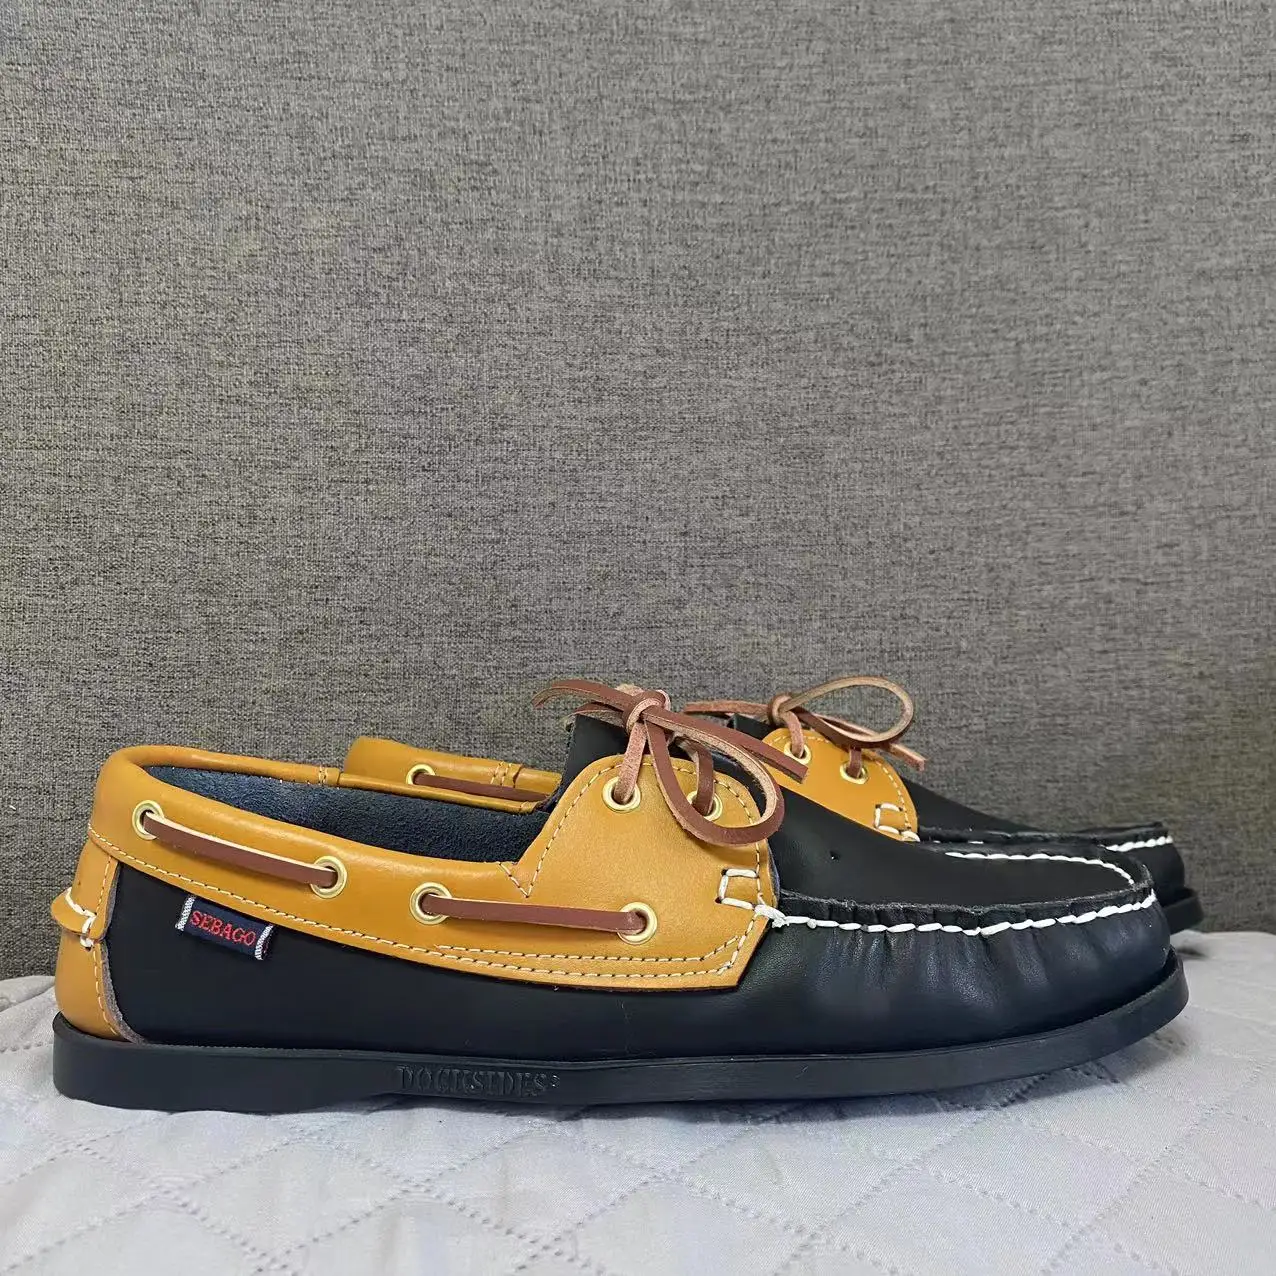 Men Authentic Sebago Docksides Shoes - Premium Leather Moc Toe Up Boat Shoes AB015 - AliExpress